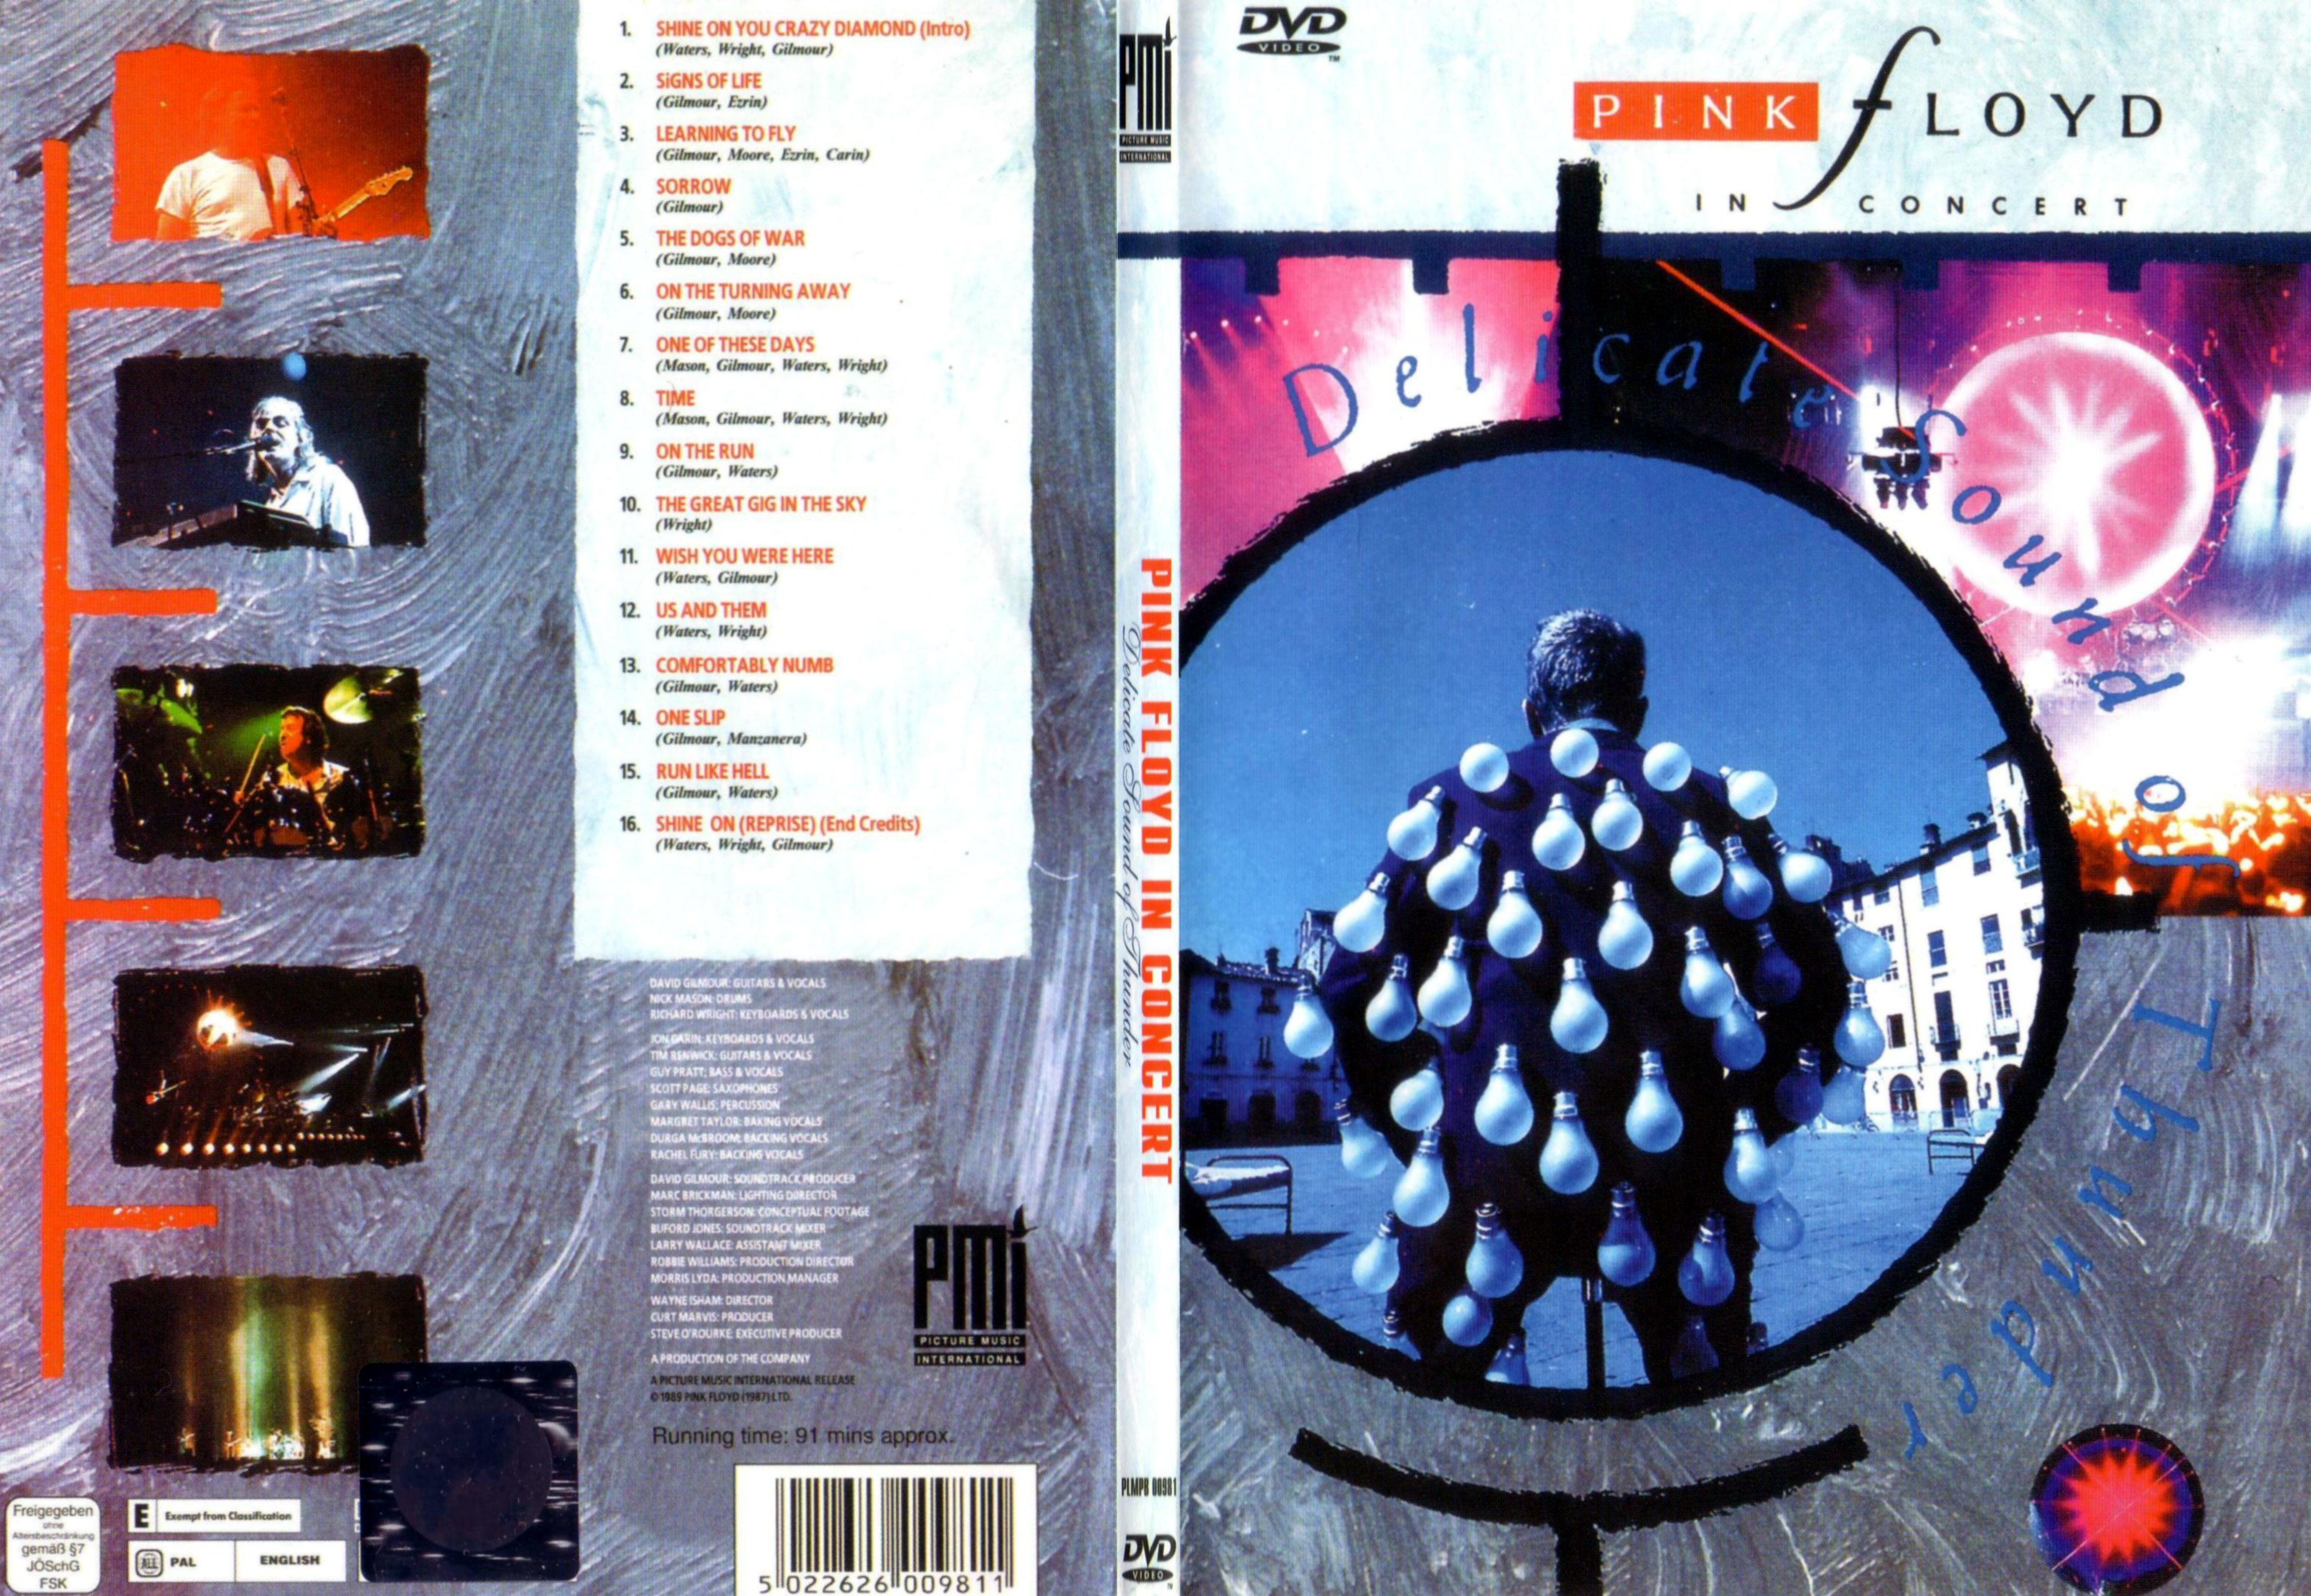 Jaquette DVD Pink Floyd in concert - SLIM